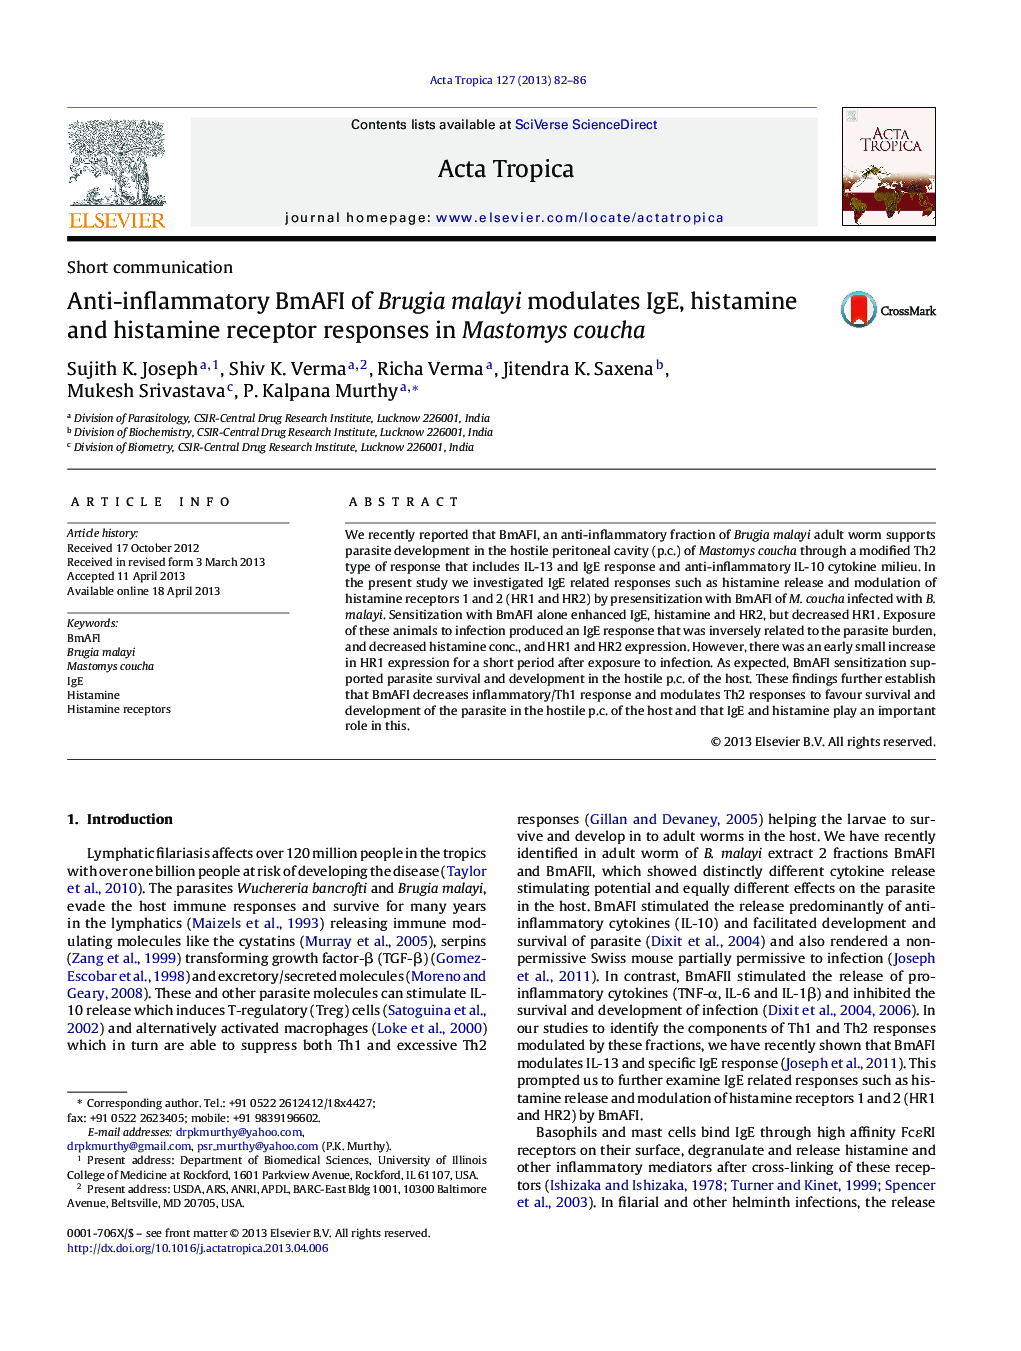 Anti-inflammatory BmAFI of Brugia malayi modulates IgE, histamine and histamine receptor responses in Mastomys coucha